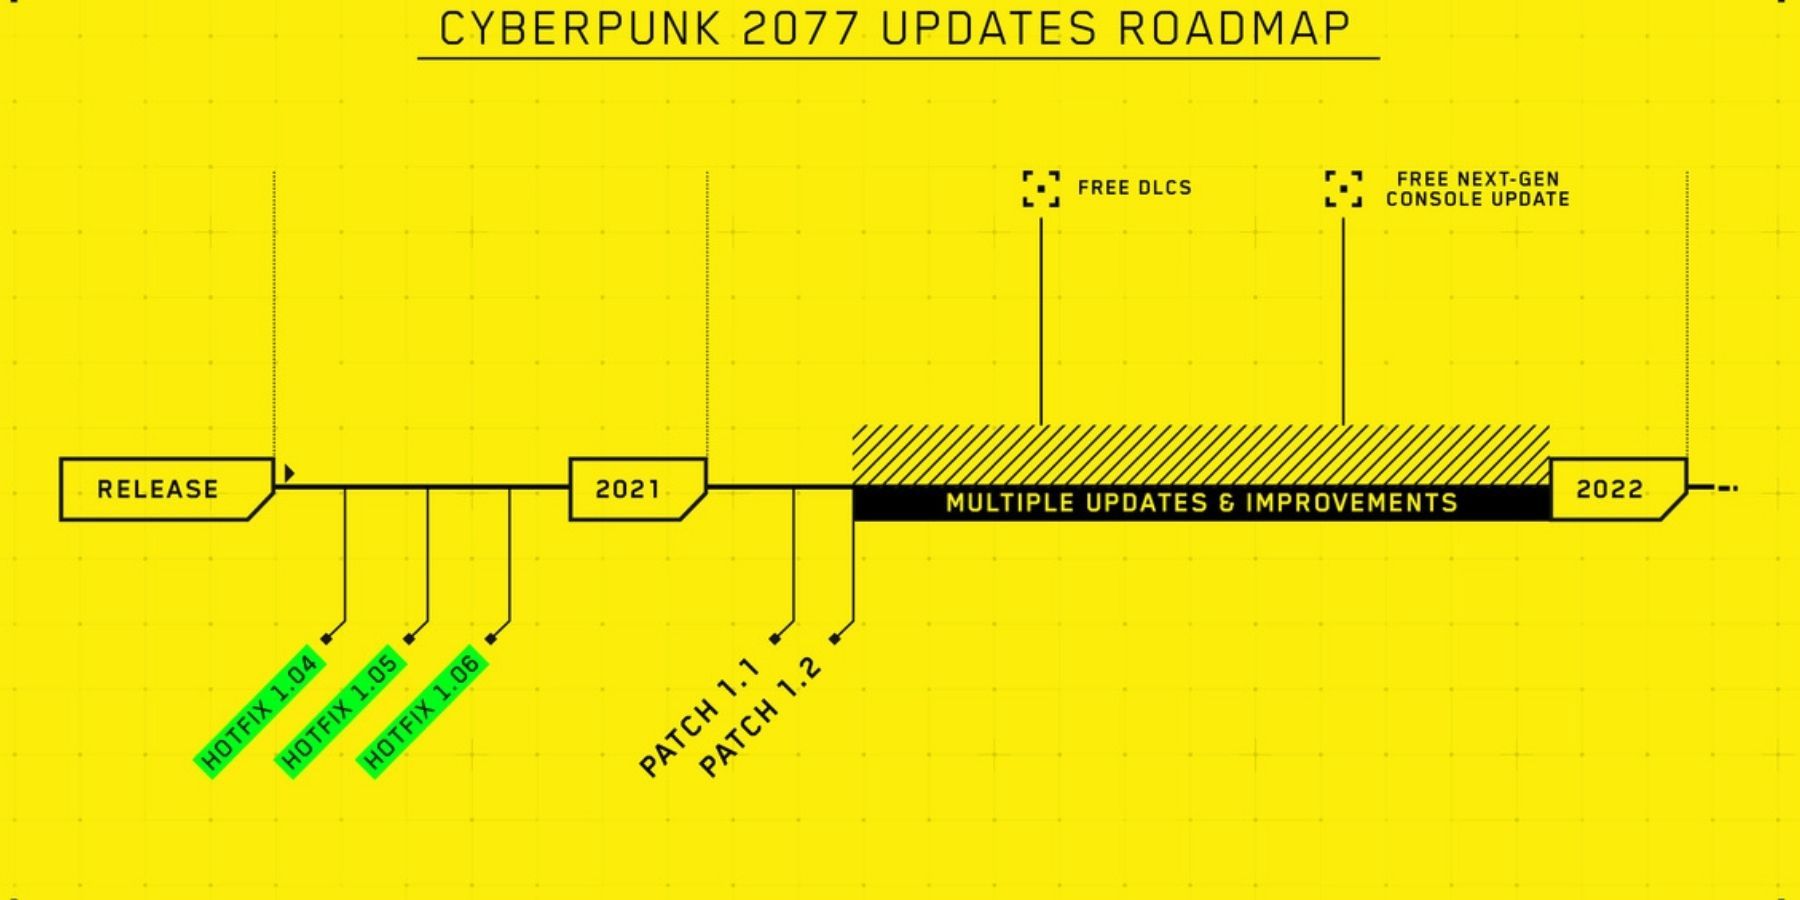 Cyberpunk 2077 Update Timeline